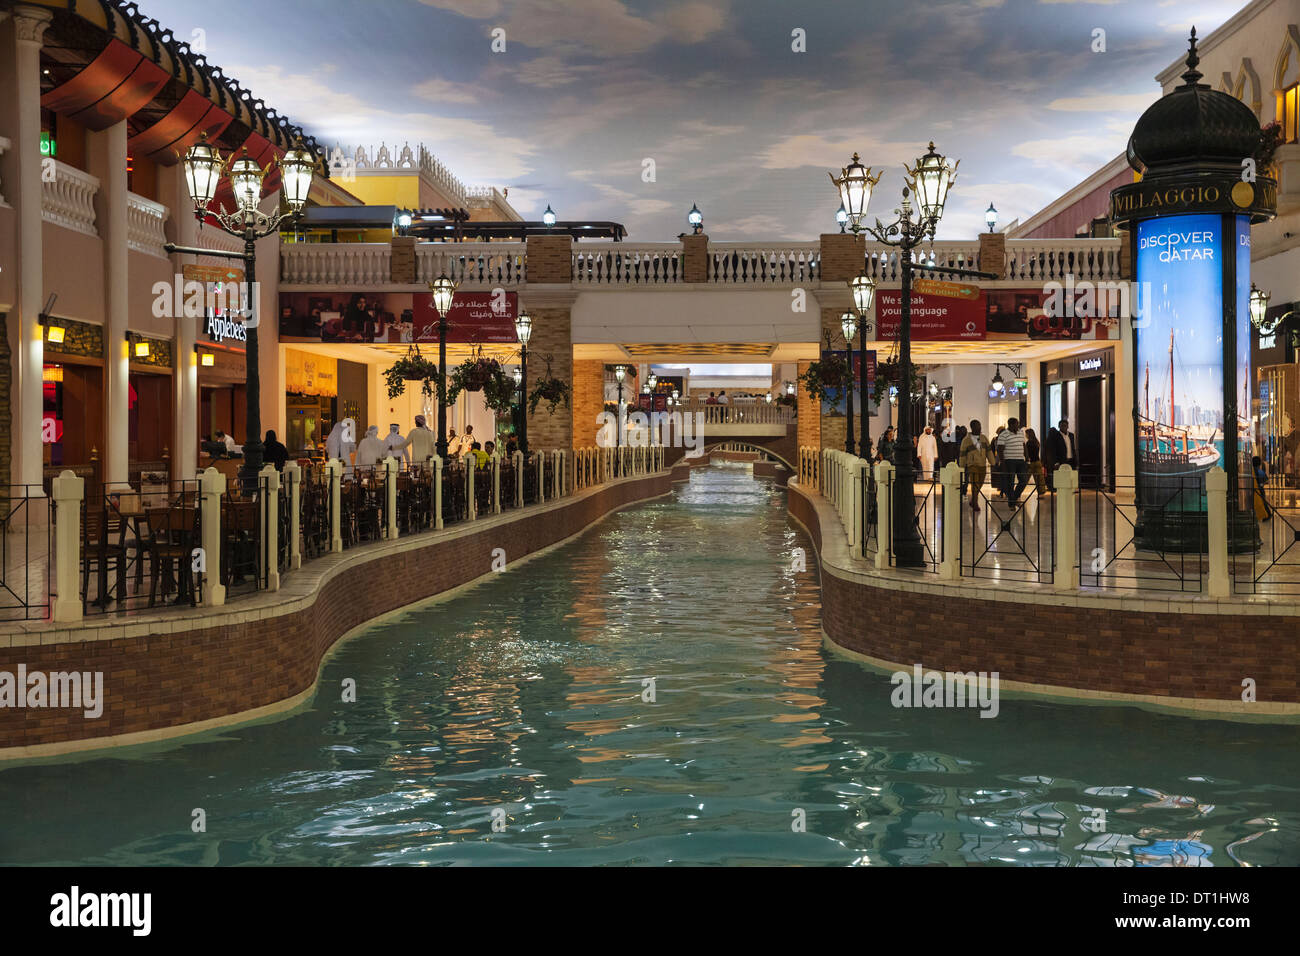 Villaggio Mall, Doha, Qatar, Middle East Stock Photo